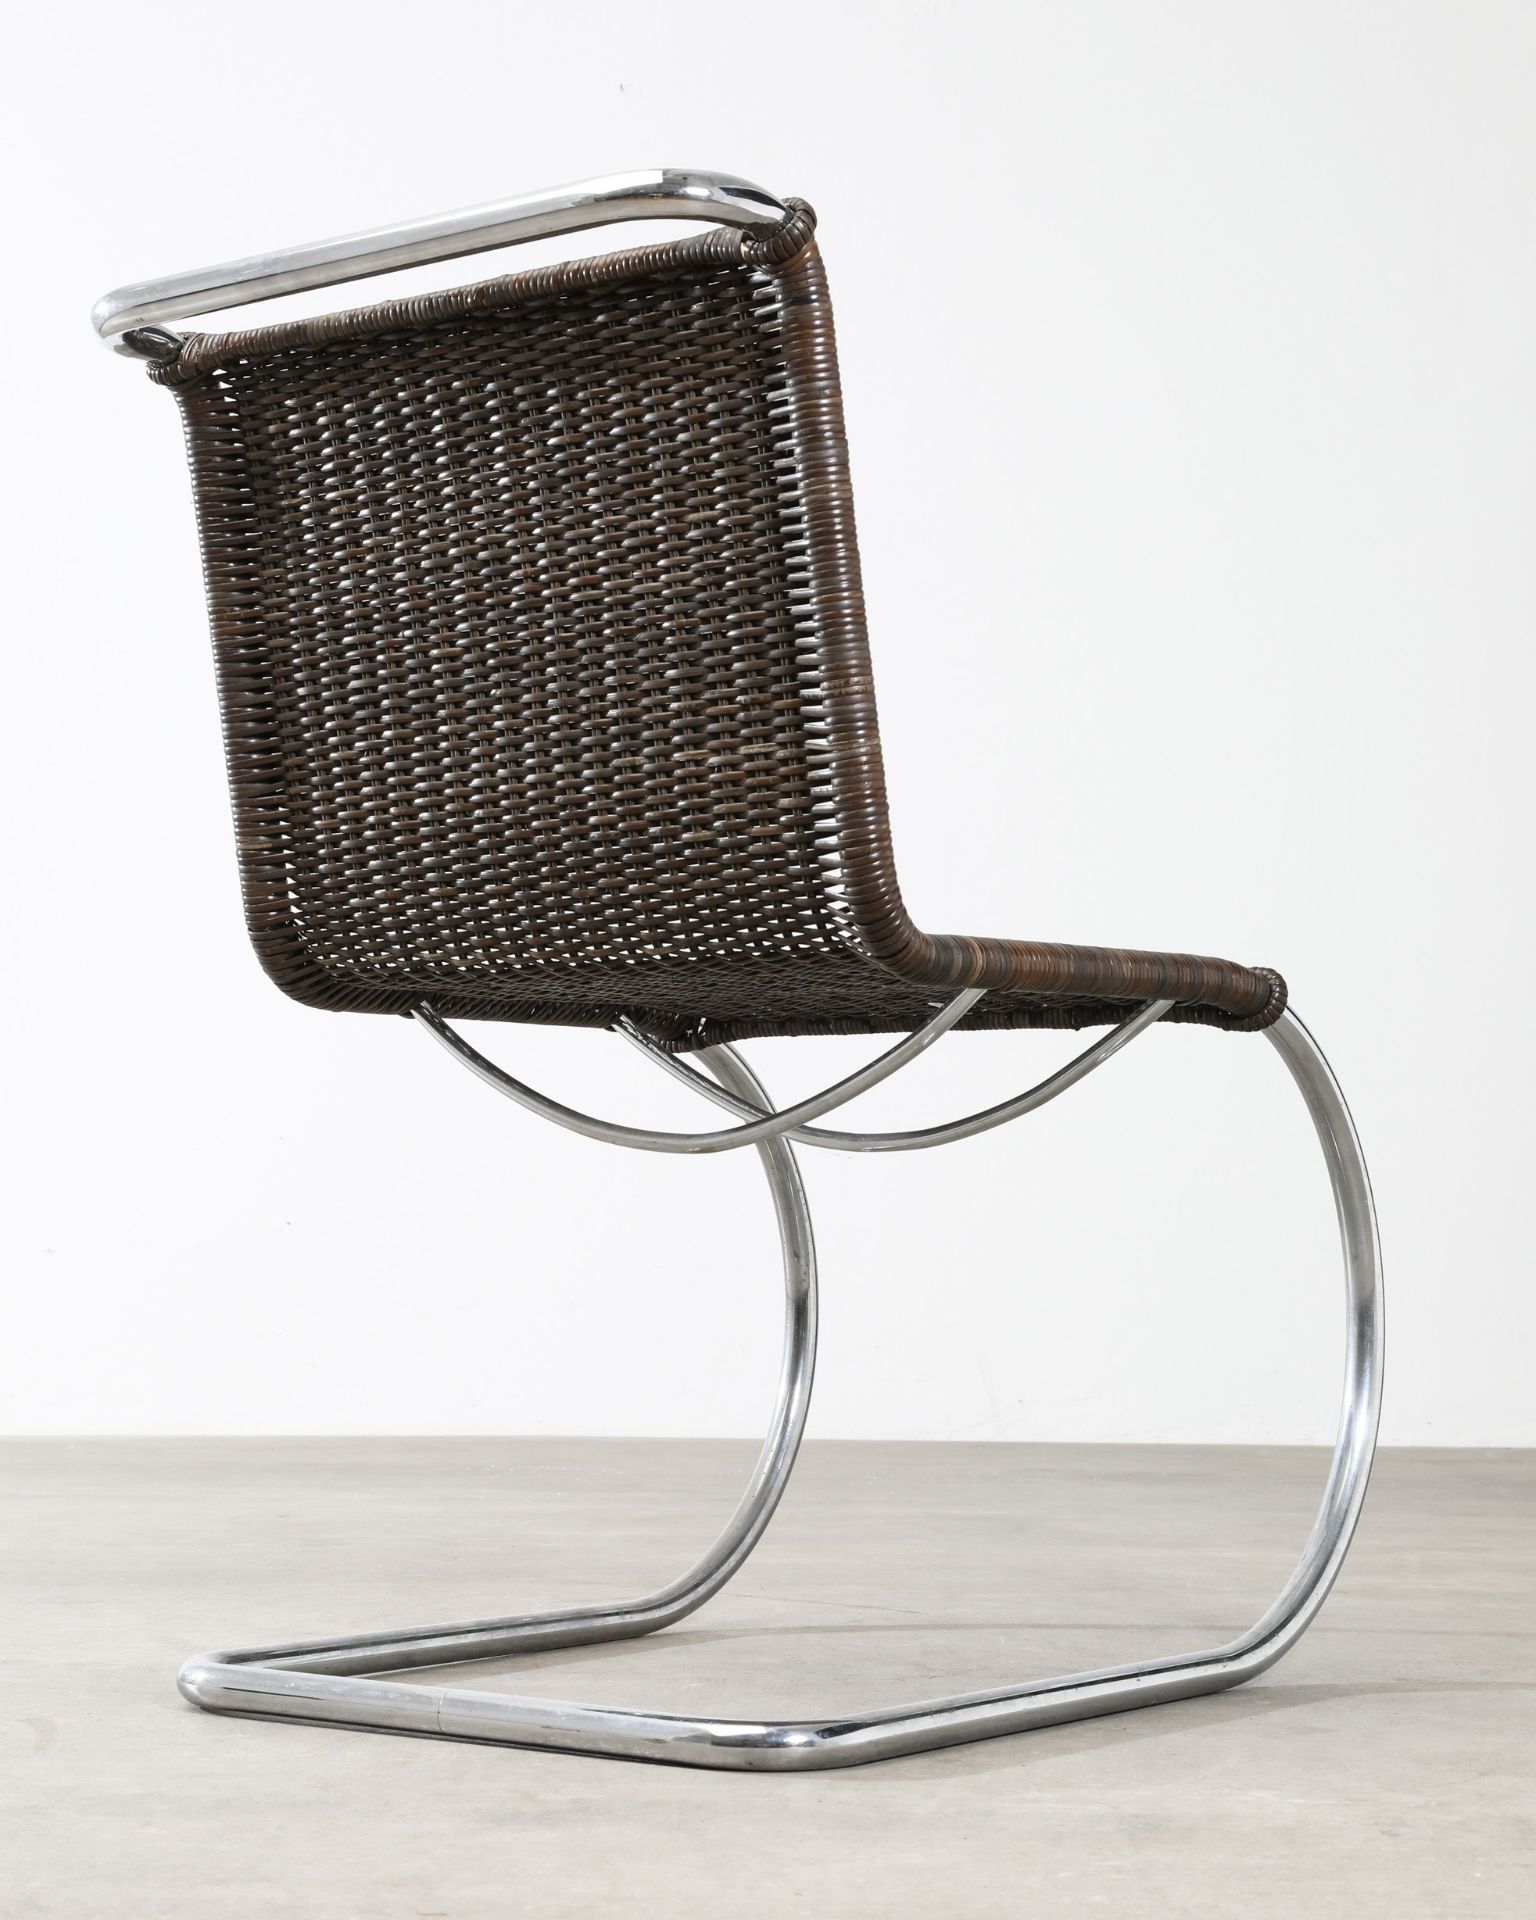 L. Mies van der Rohe, Thonet, Chair Model MR10 / MR533 - Image 4 of 5